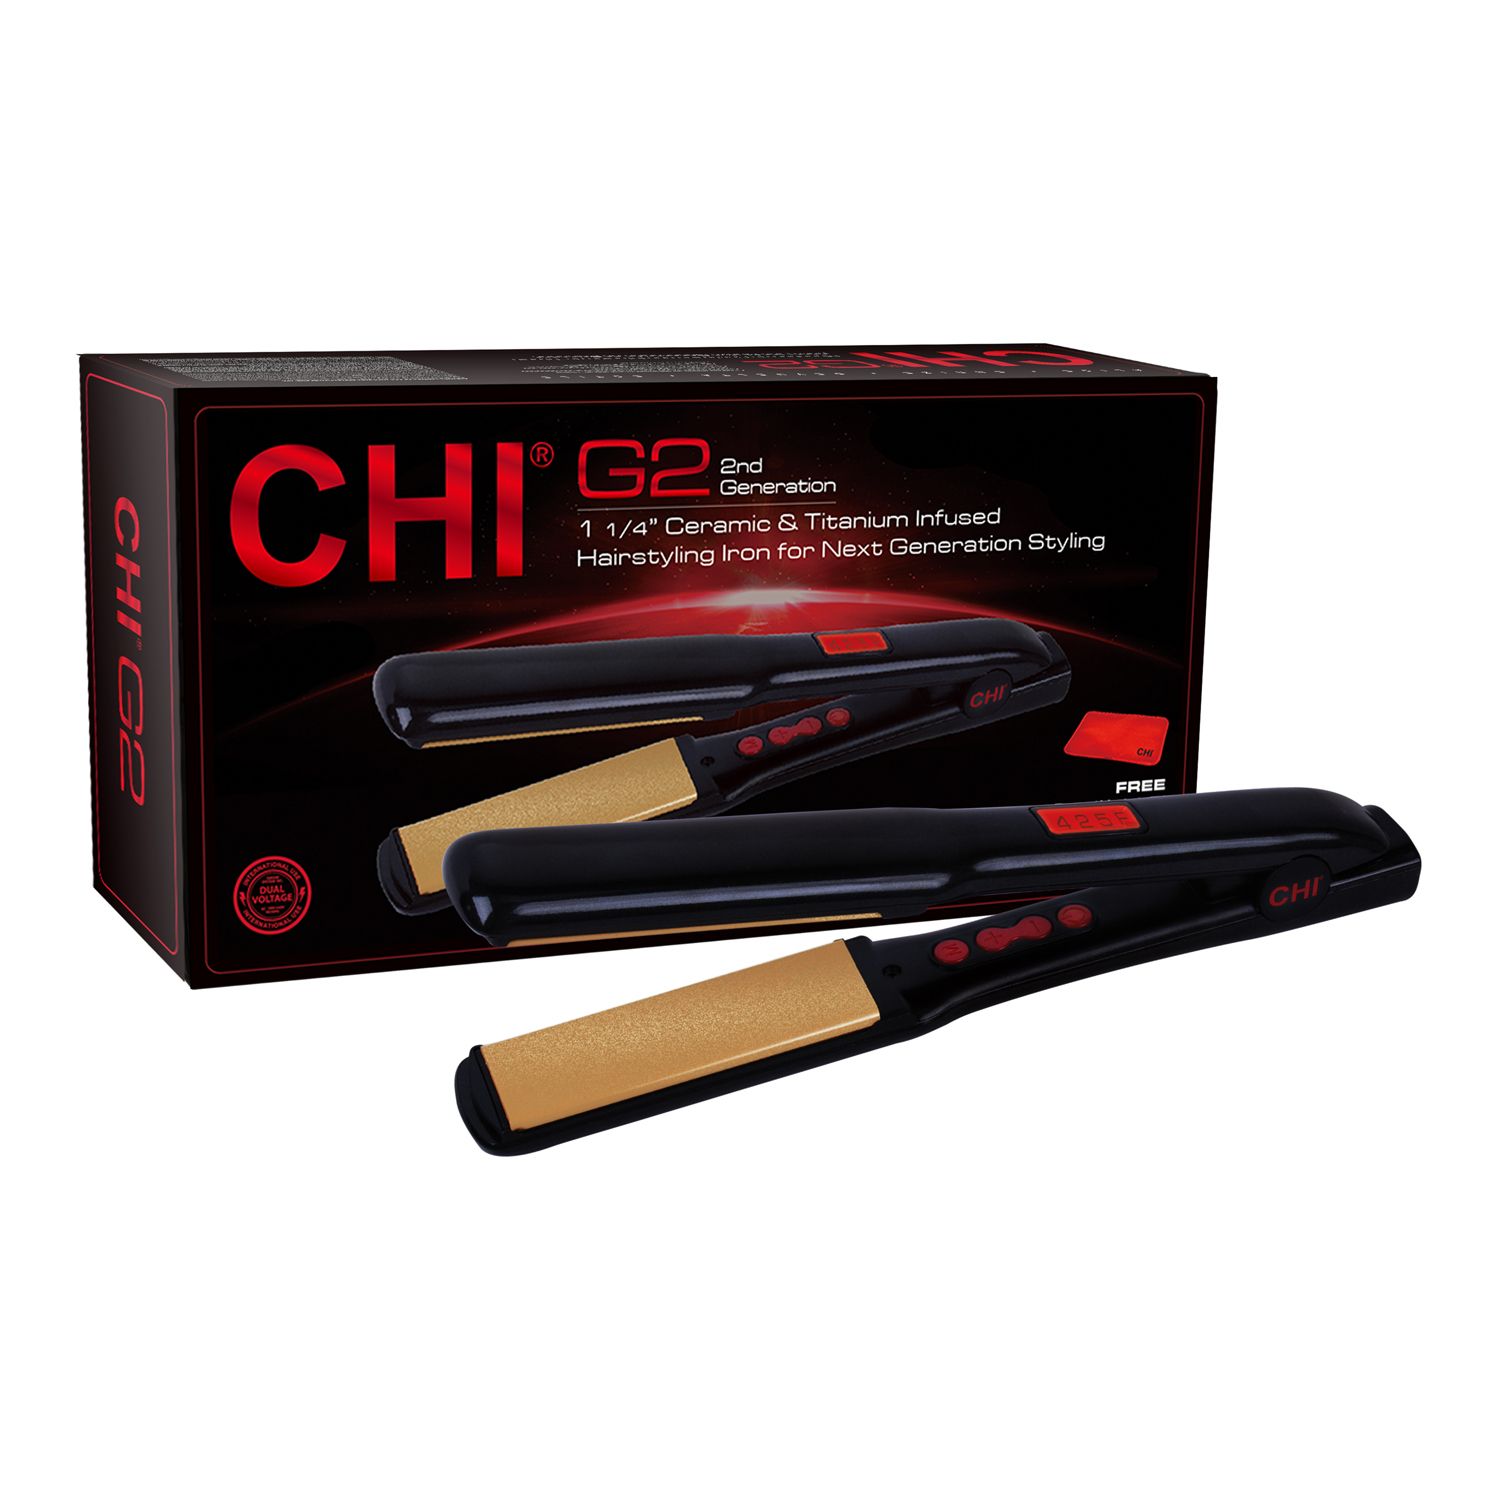 chi cordless hair straightener